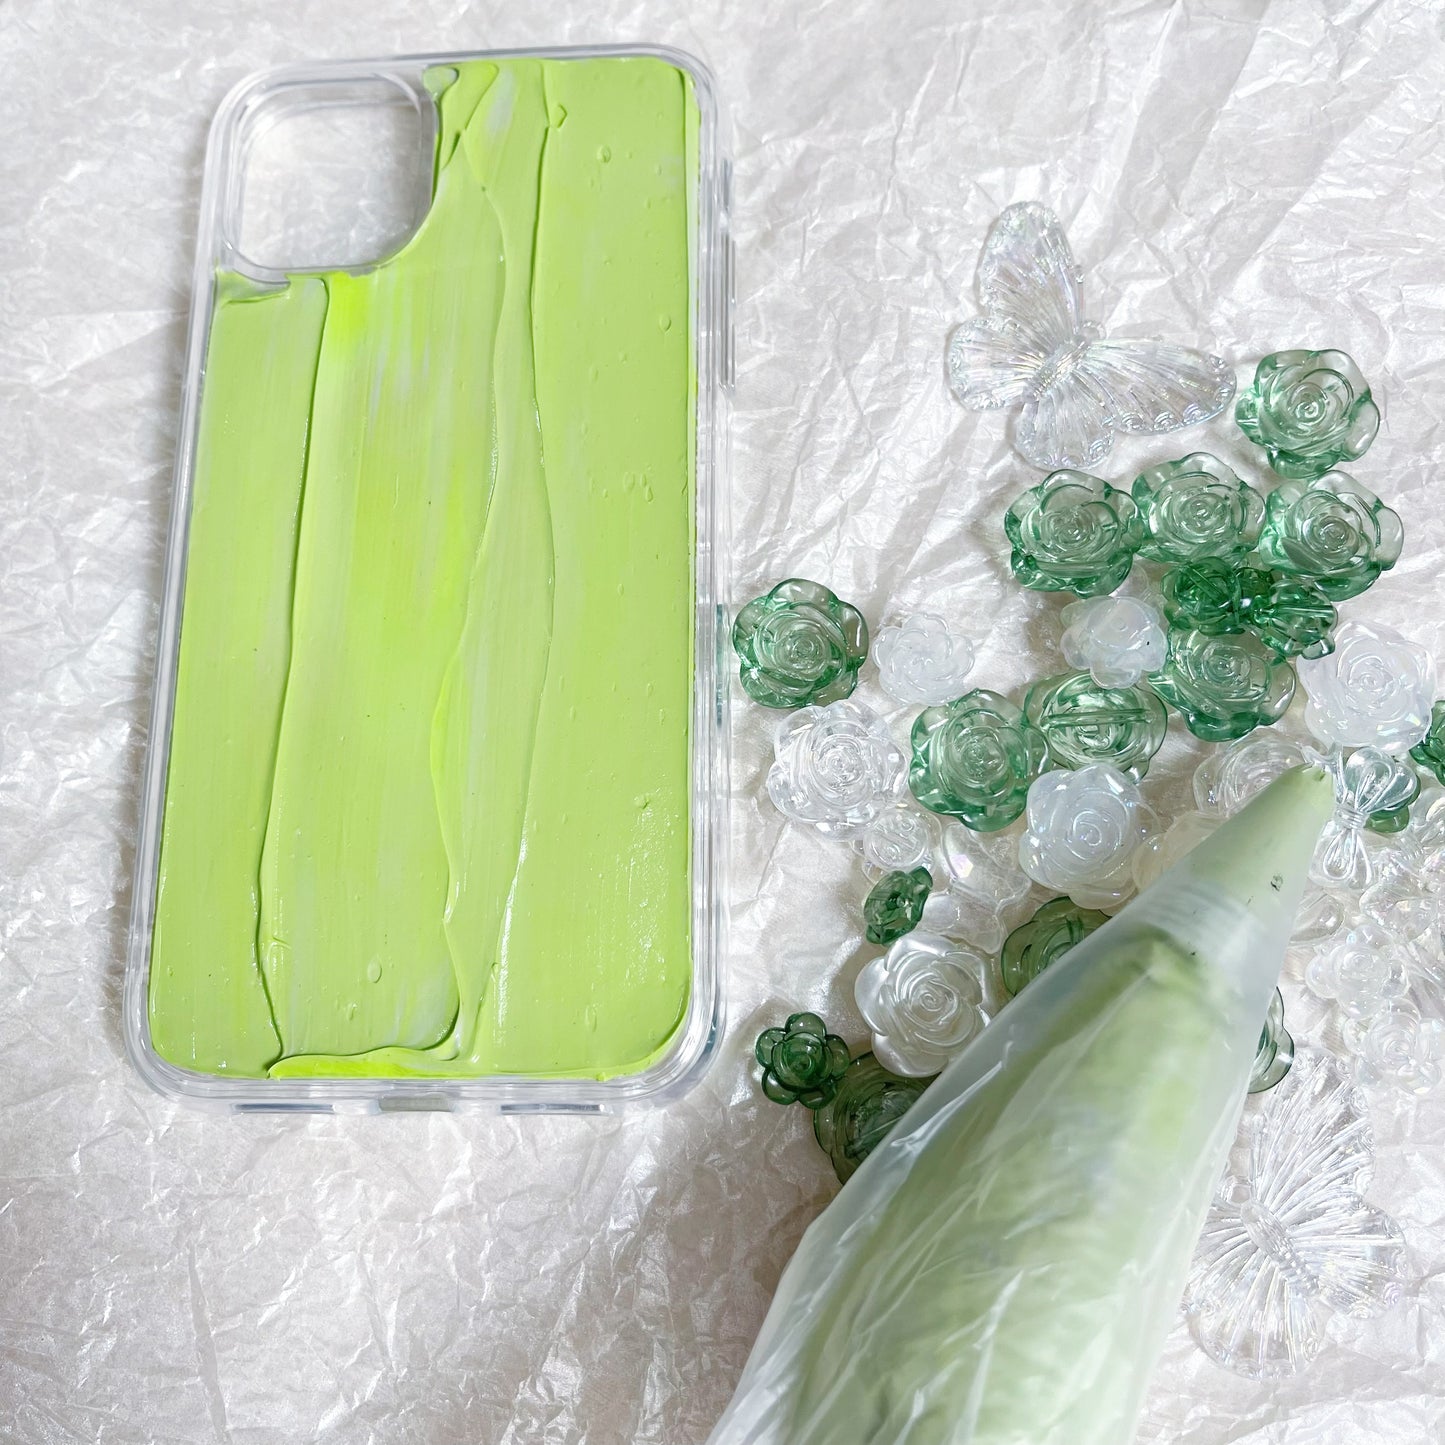 【CraftBeast Ready-made】Elegant Baroque Green Rose phone case